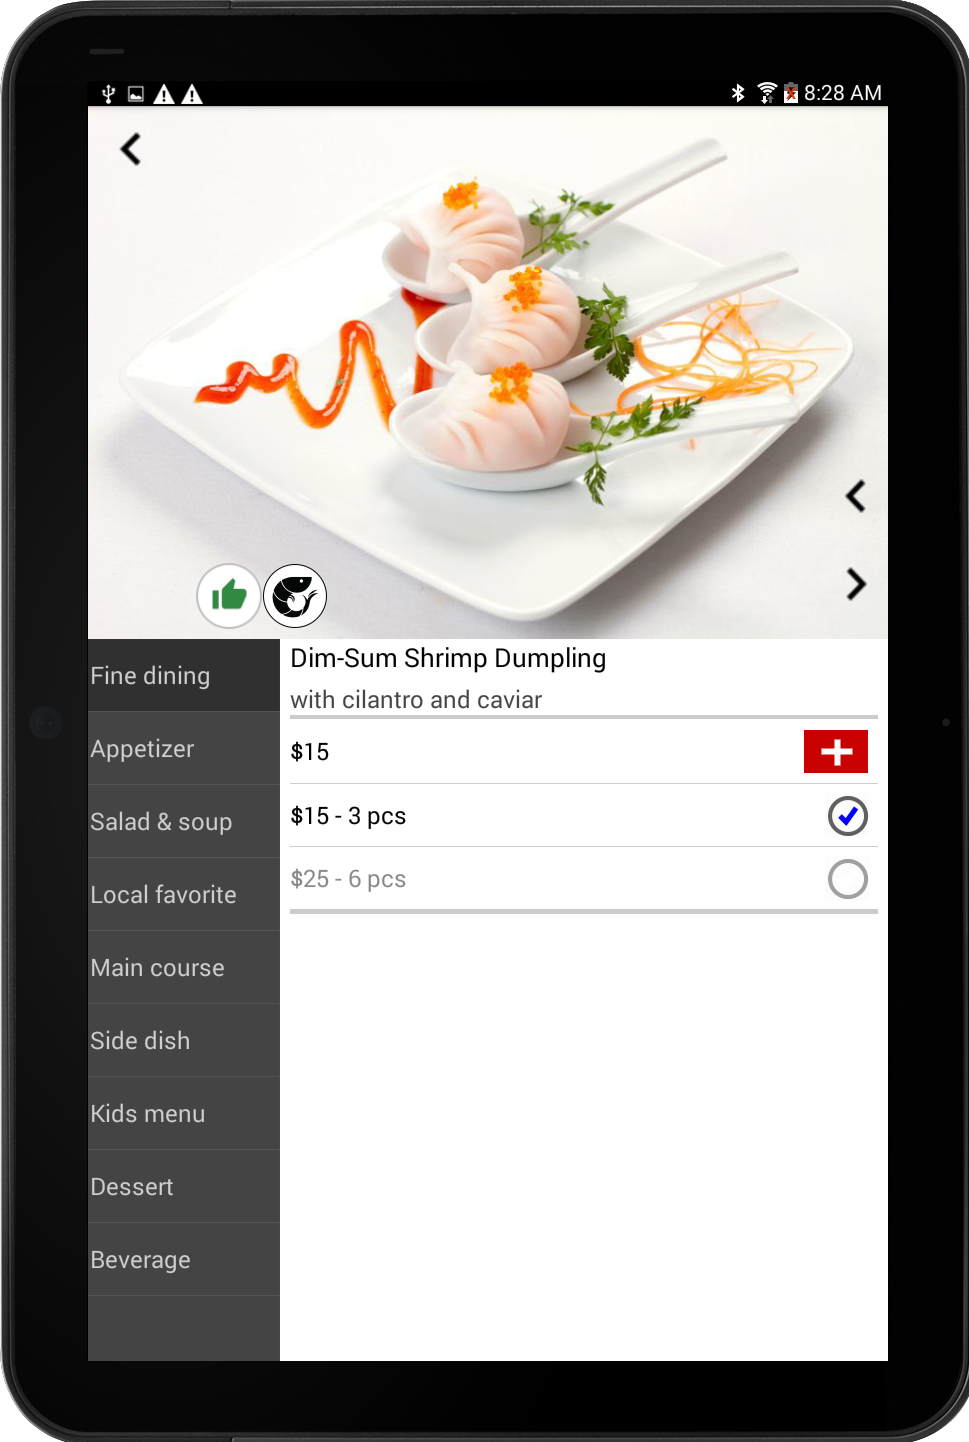 Restaurant Menu App on iPad